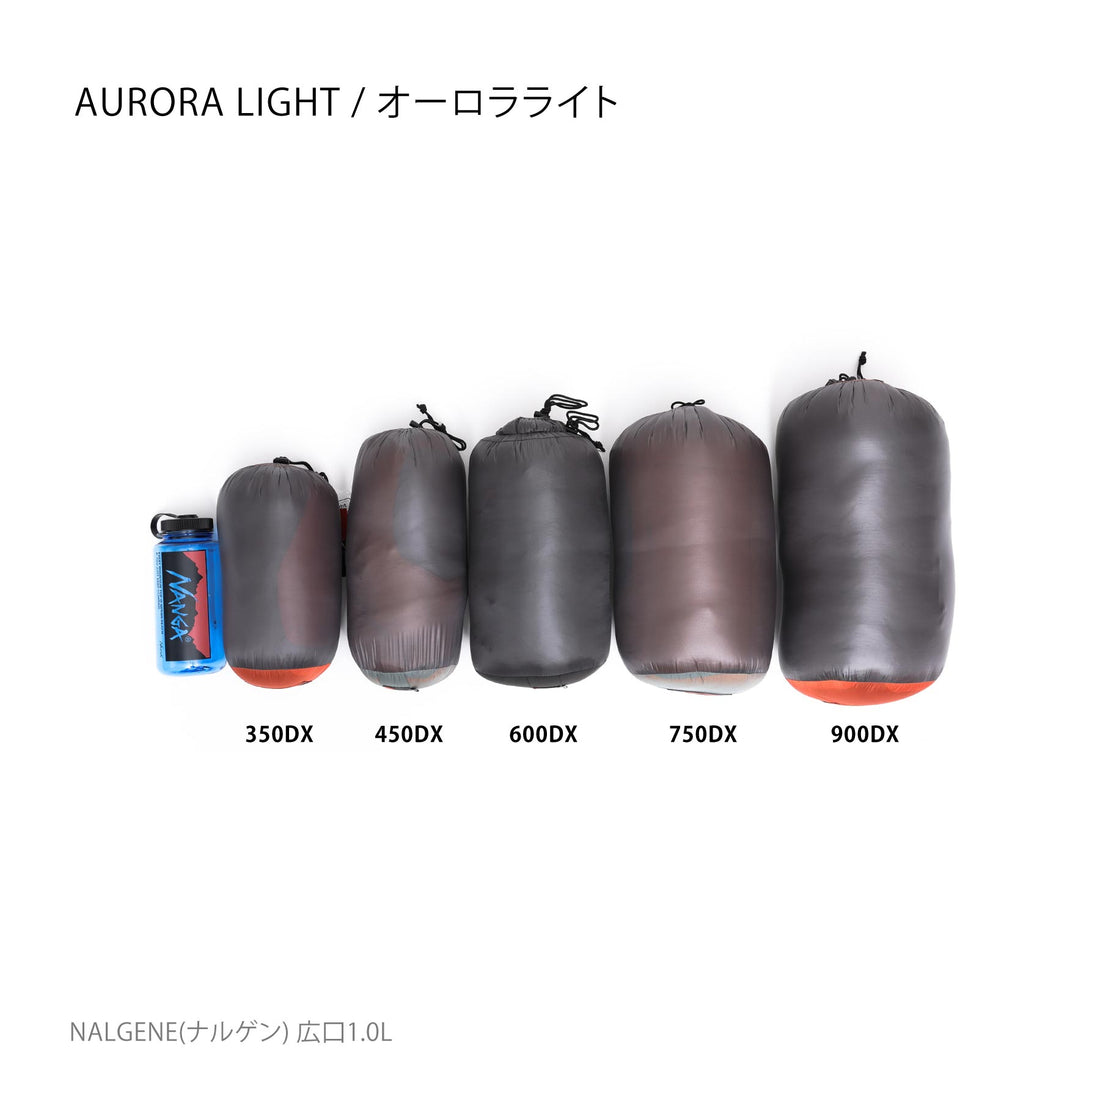 AURORA light 750 DX / オーロラライト750DX